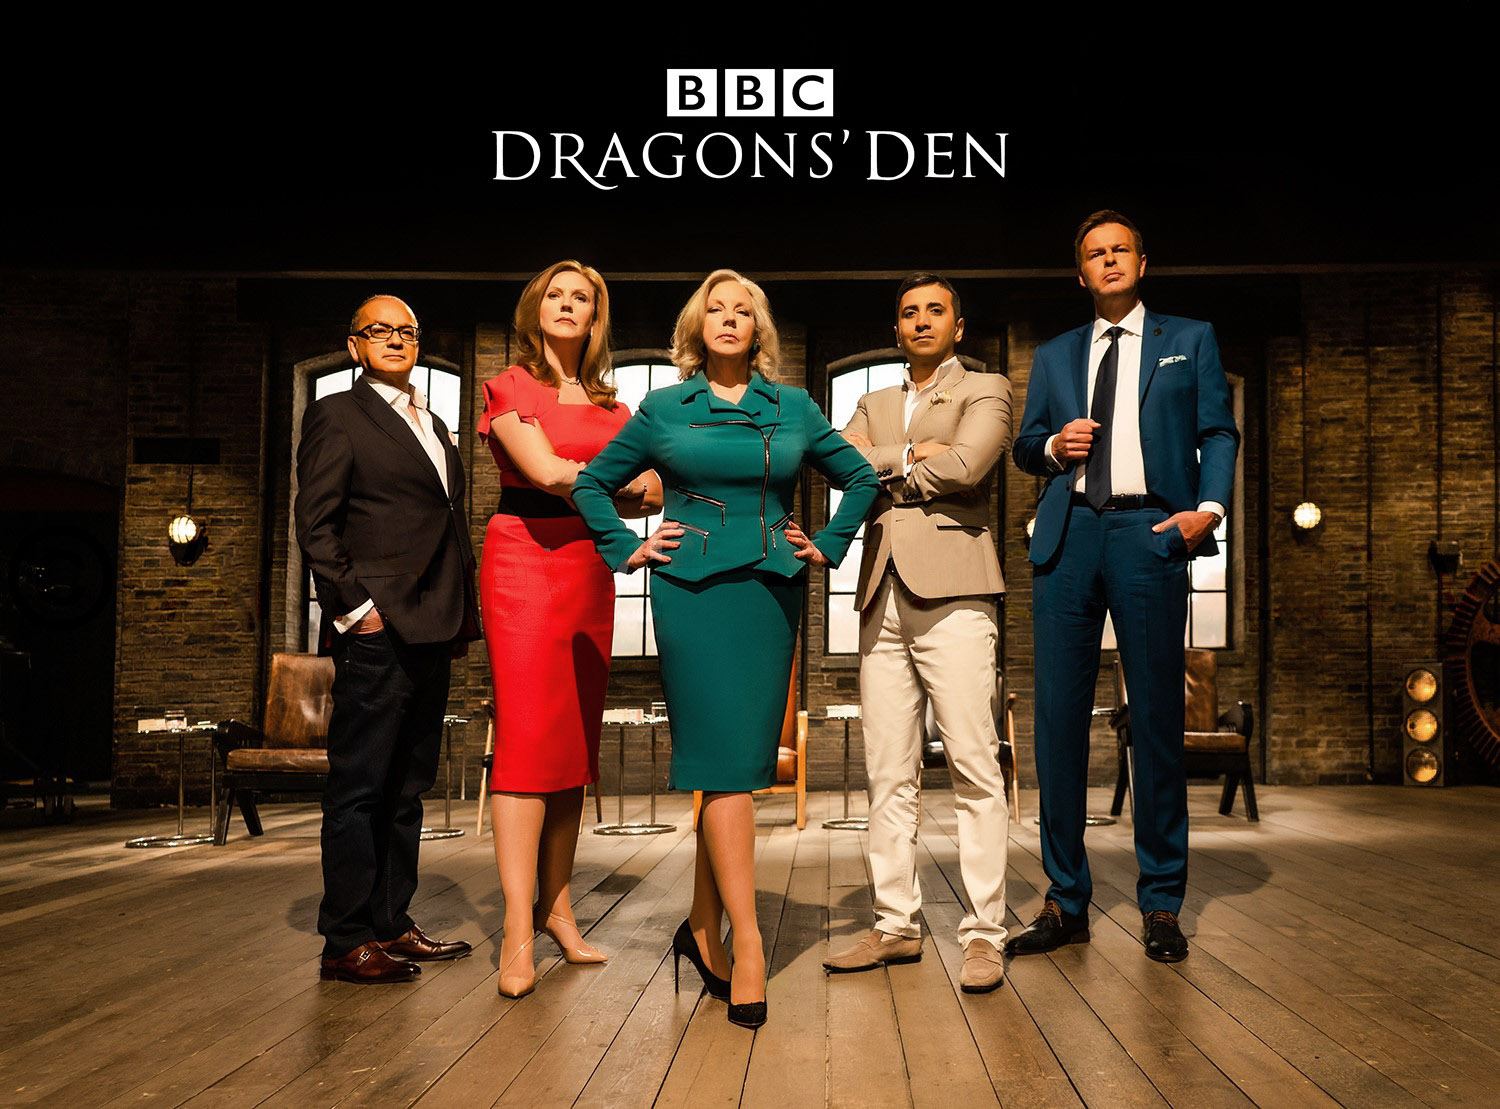 BBC show Dragon's Den - Series 16